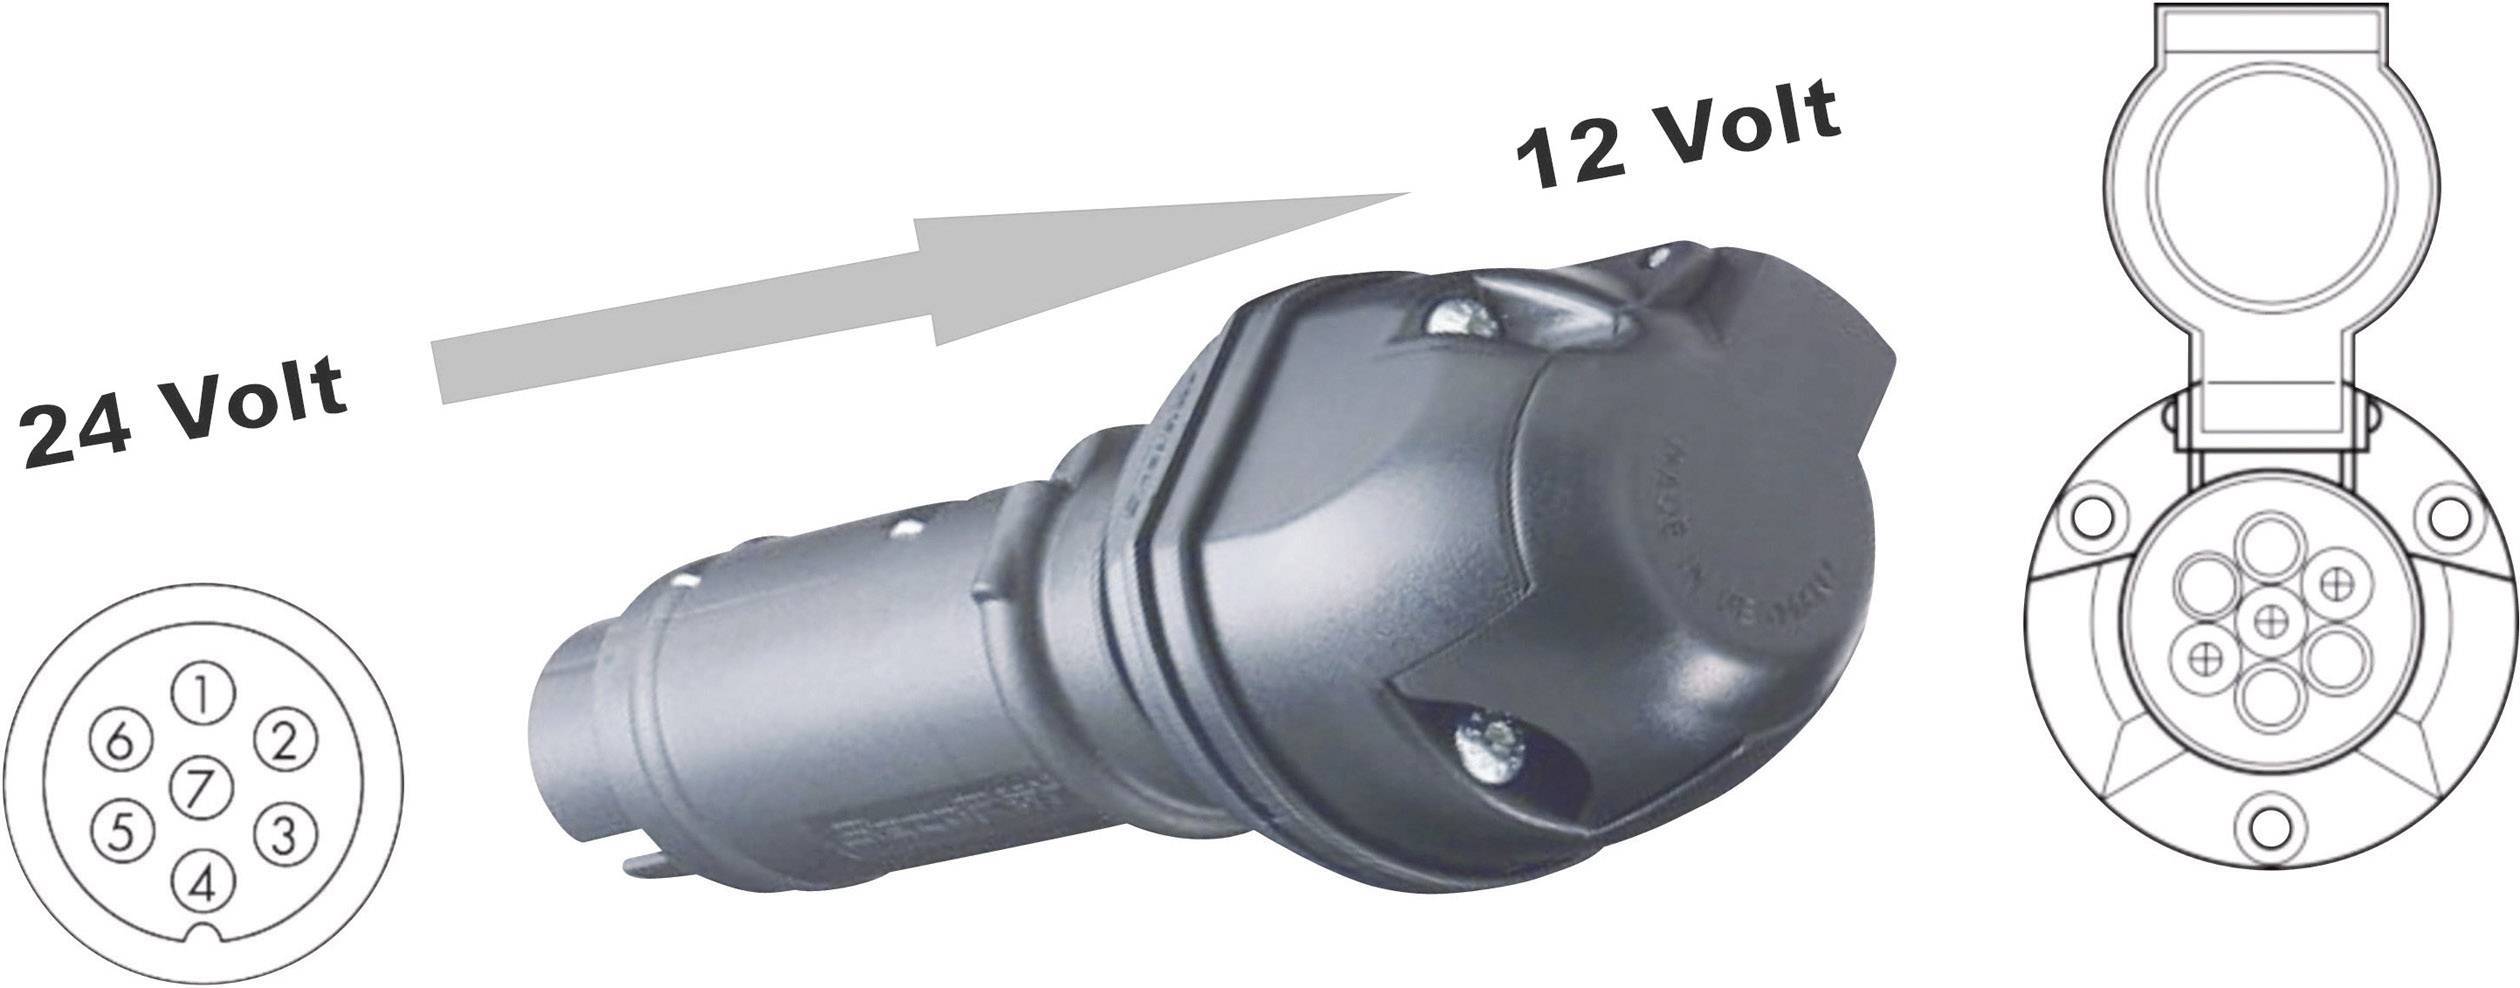 Voltage Reducer 24v to 12v (Converts a 24V Socket to 12V Socket) - spo-cs-disabled - spo-default - spo-disabled - spo-n